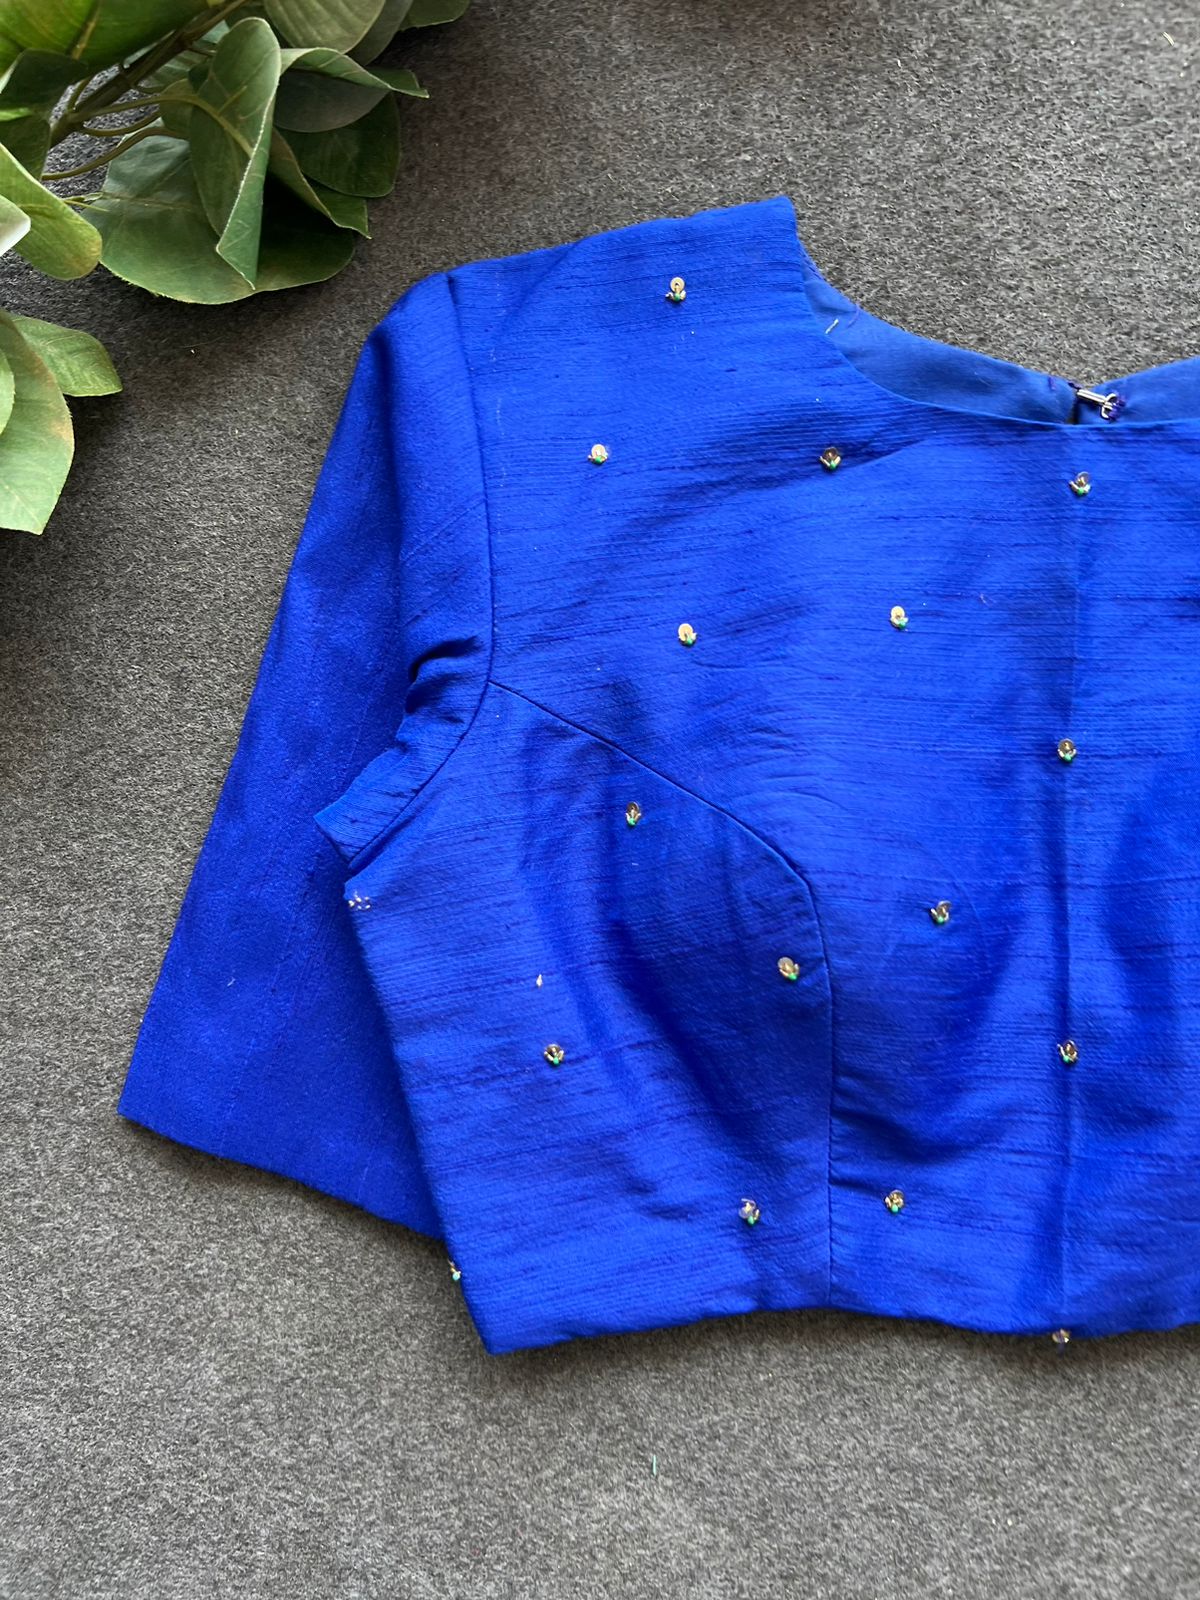 Royal blue silk intricate back hand work blouse